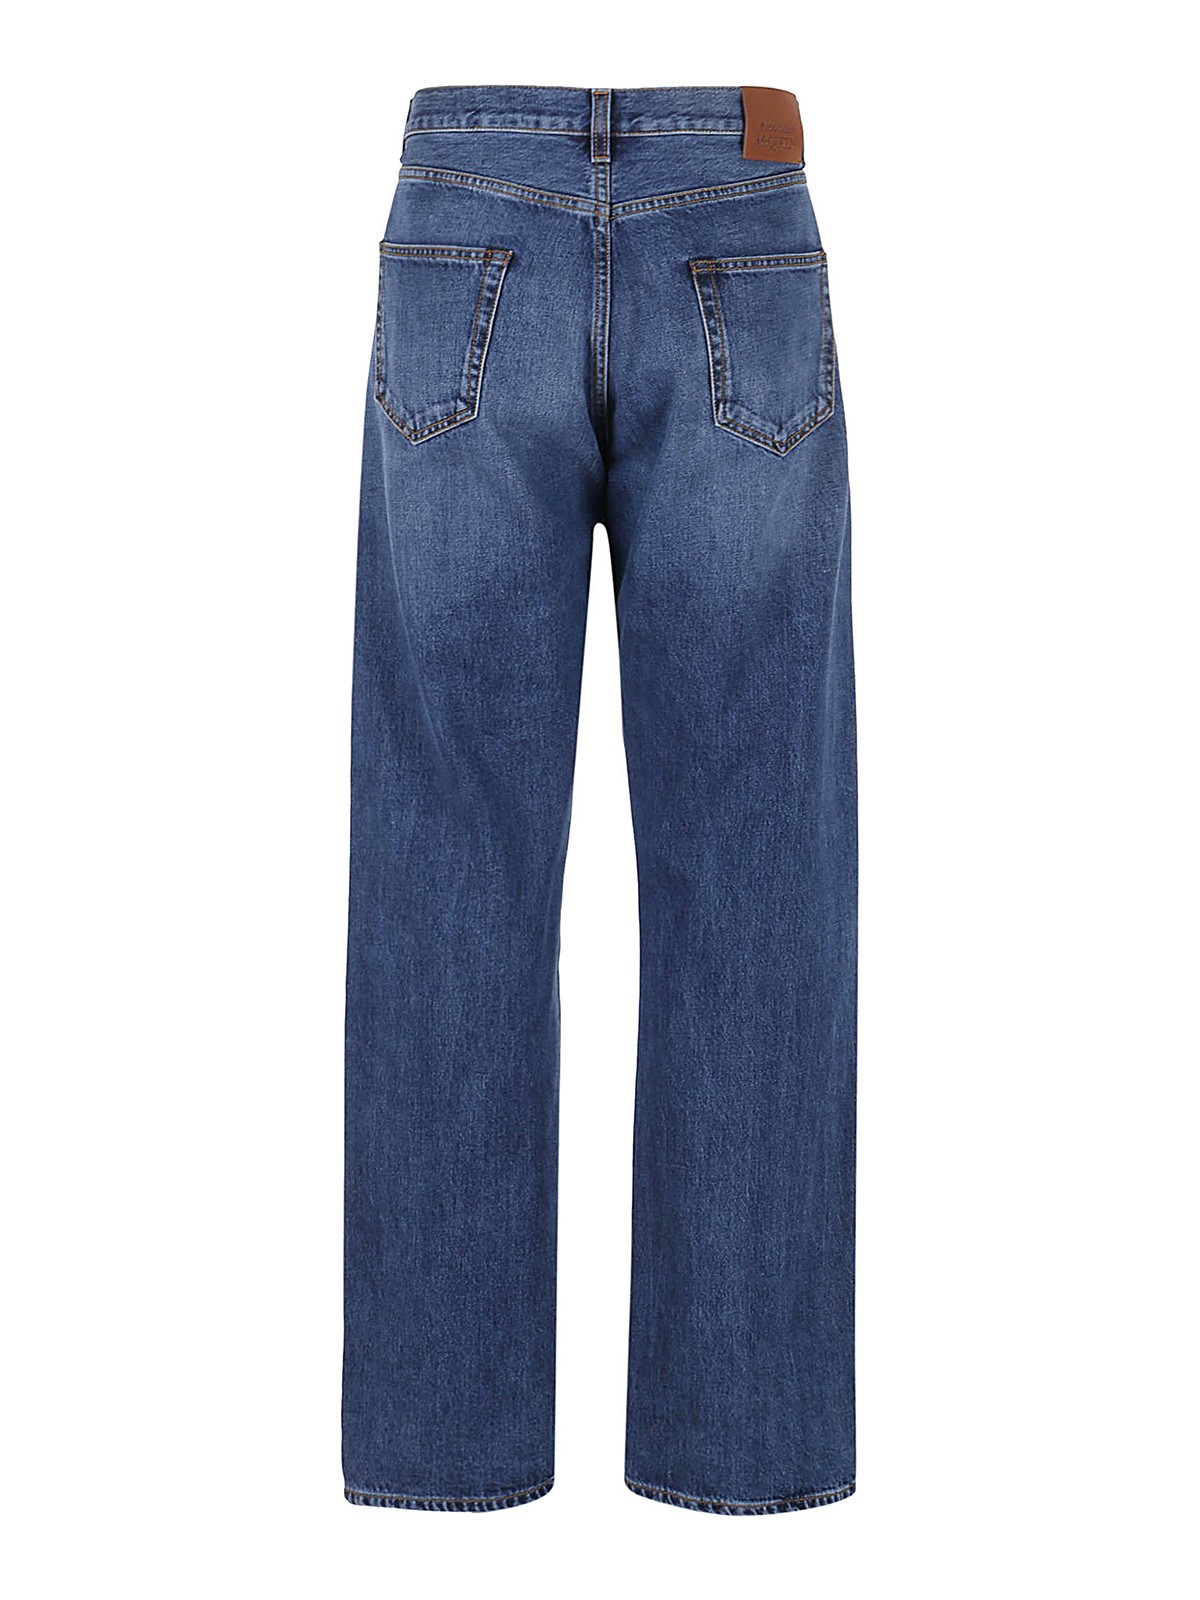 Straight leg jeans Alexander Mcqueen - Faded straight leg jeans -  726597QUY434001